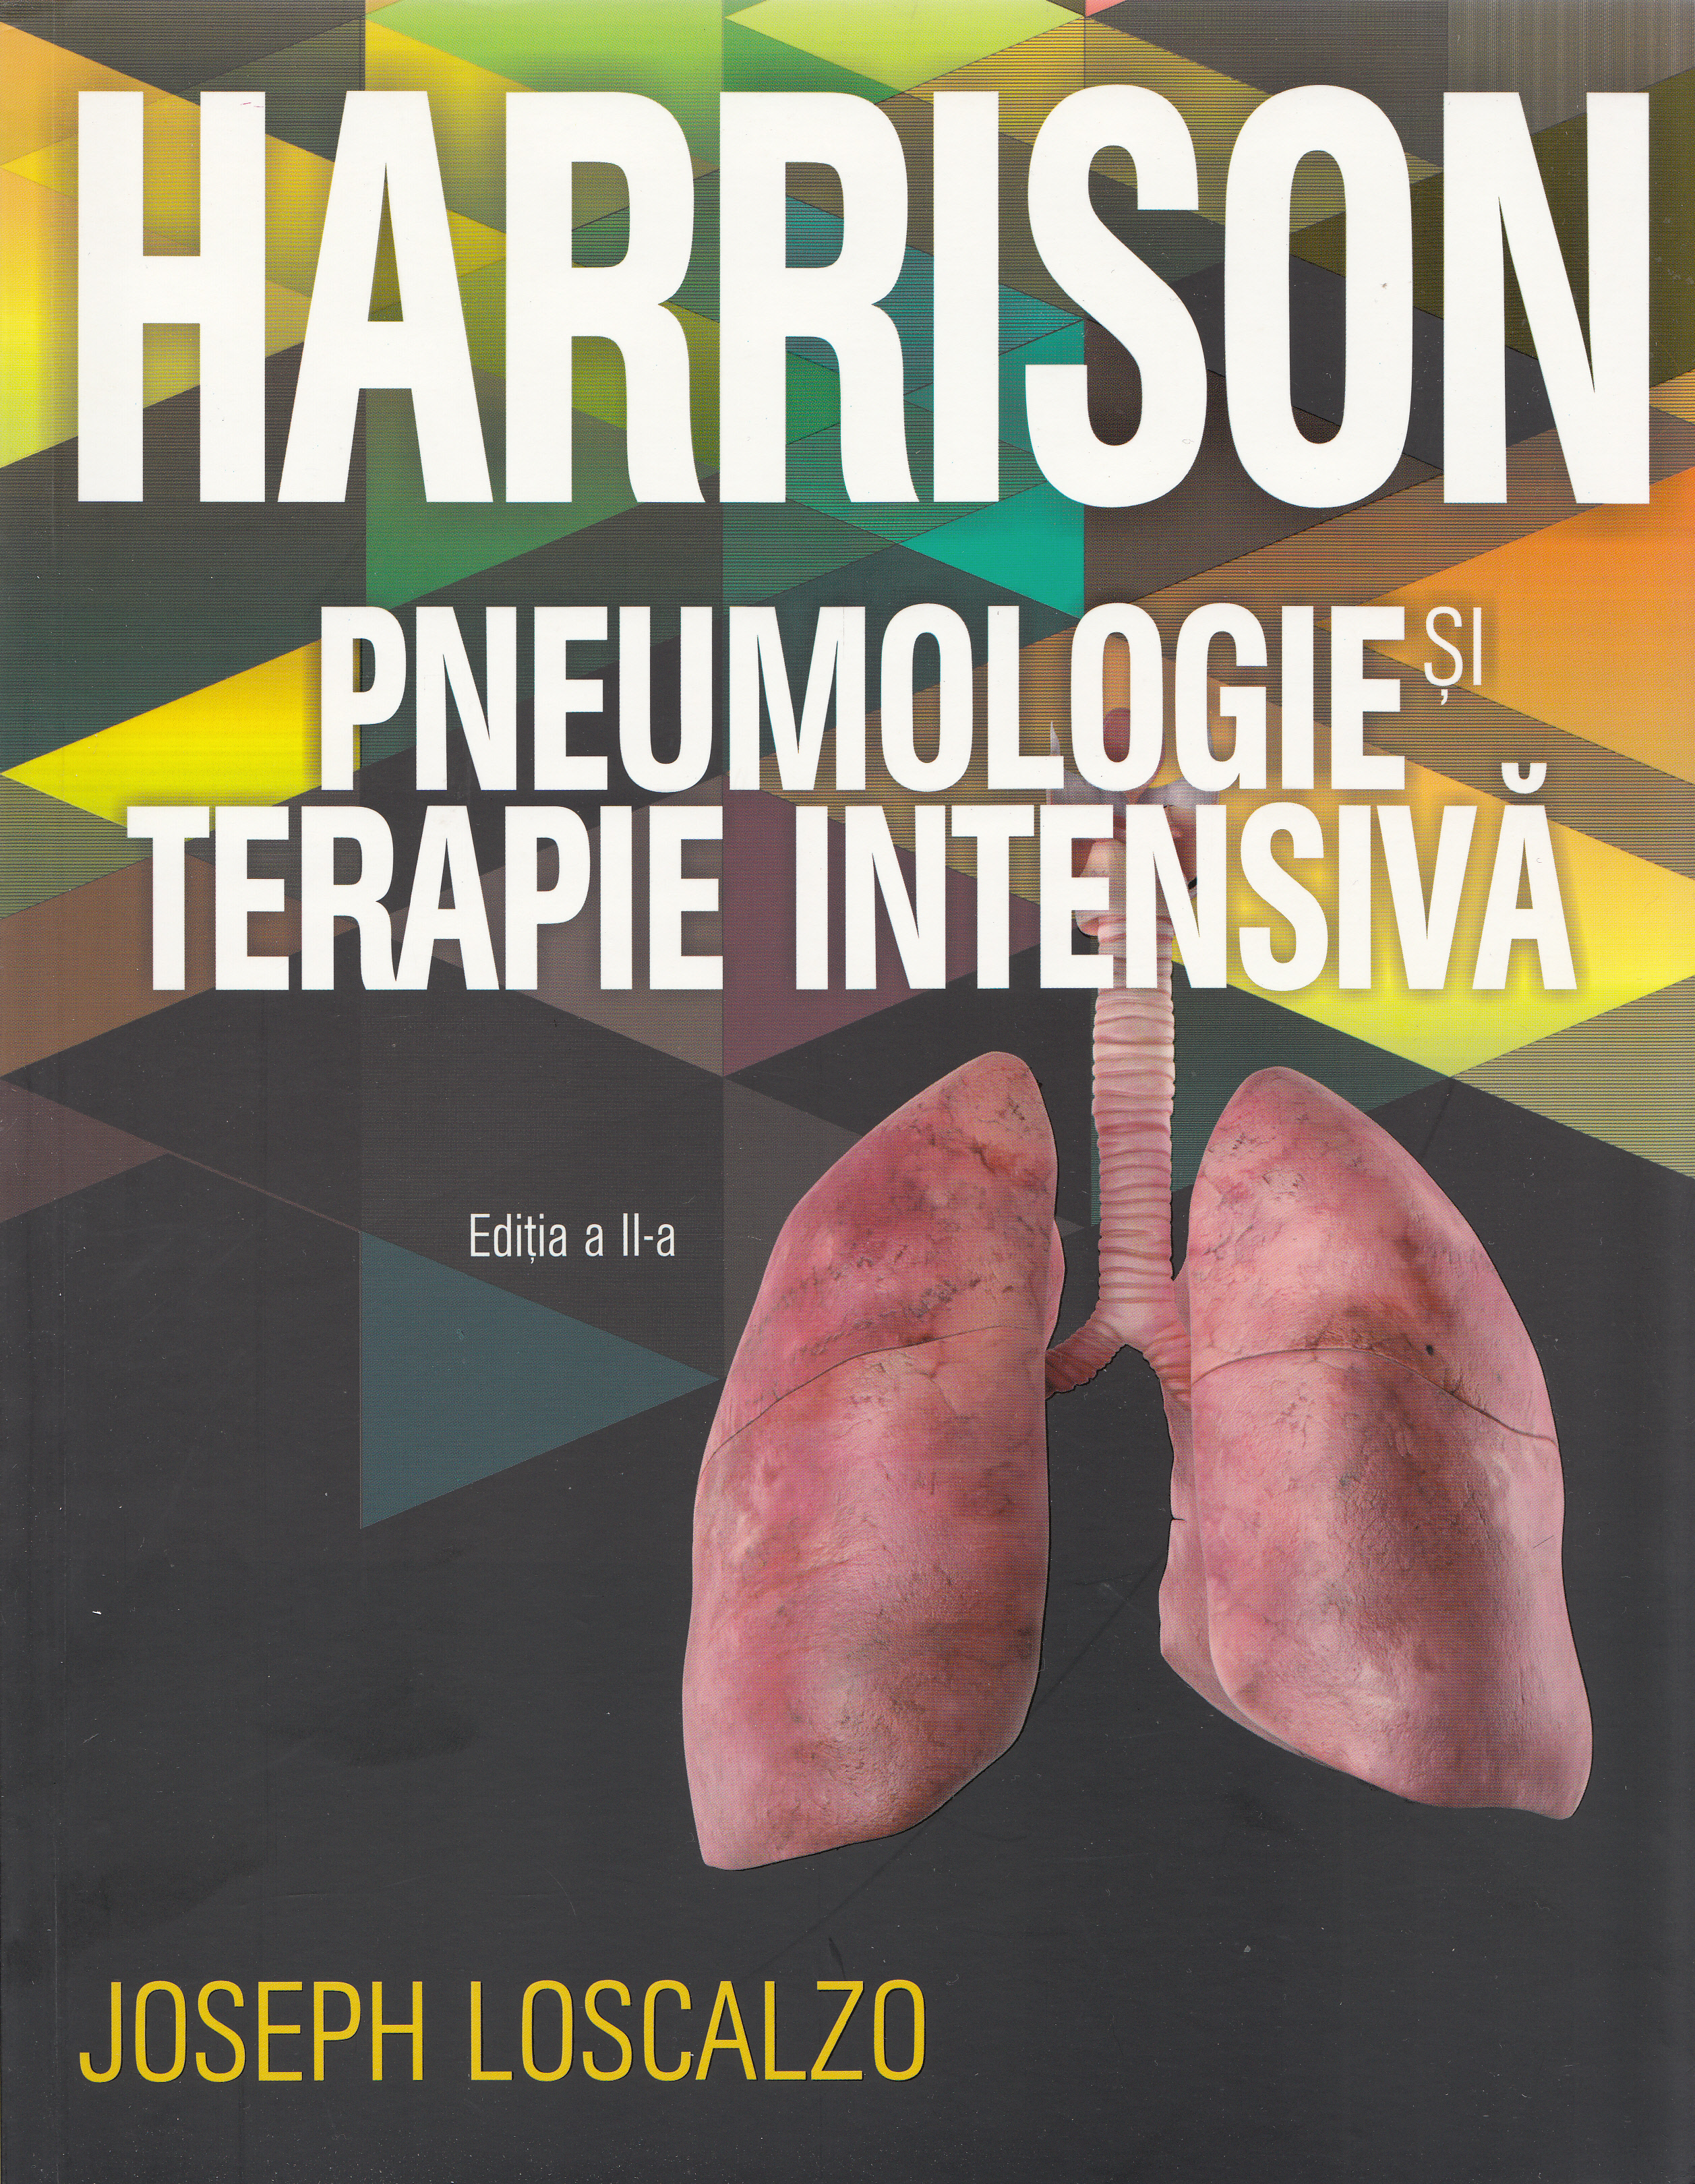 Harrison. Pneumologie si terapie intensiva Ed.2 - Joseph Loscalzo